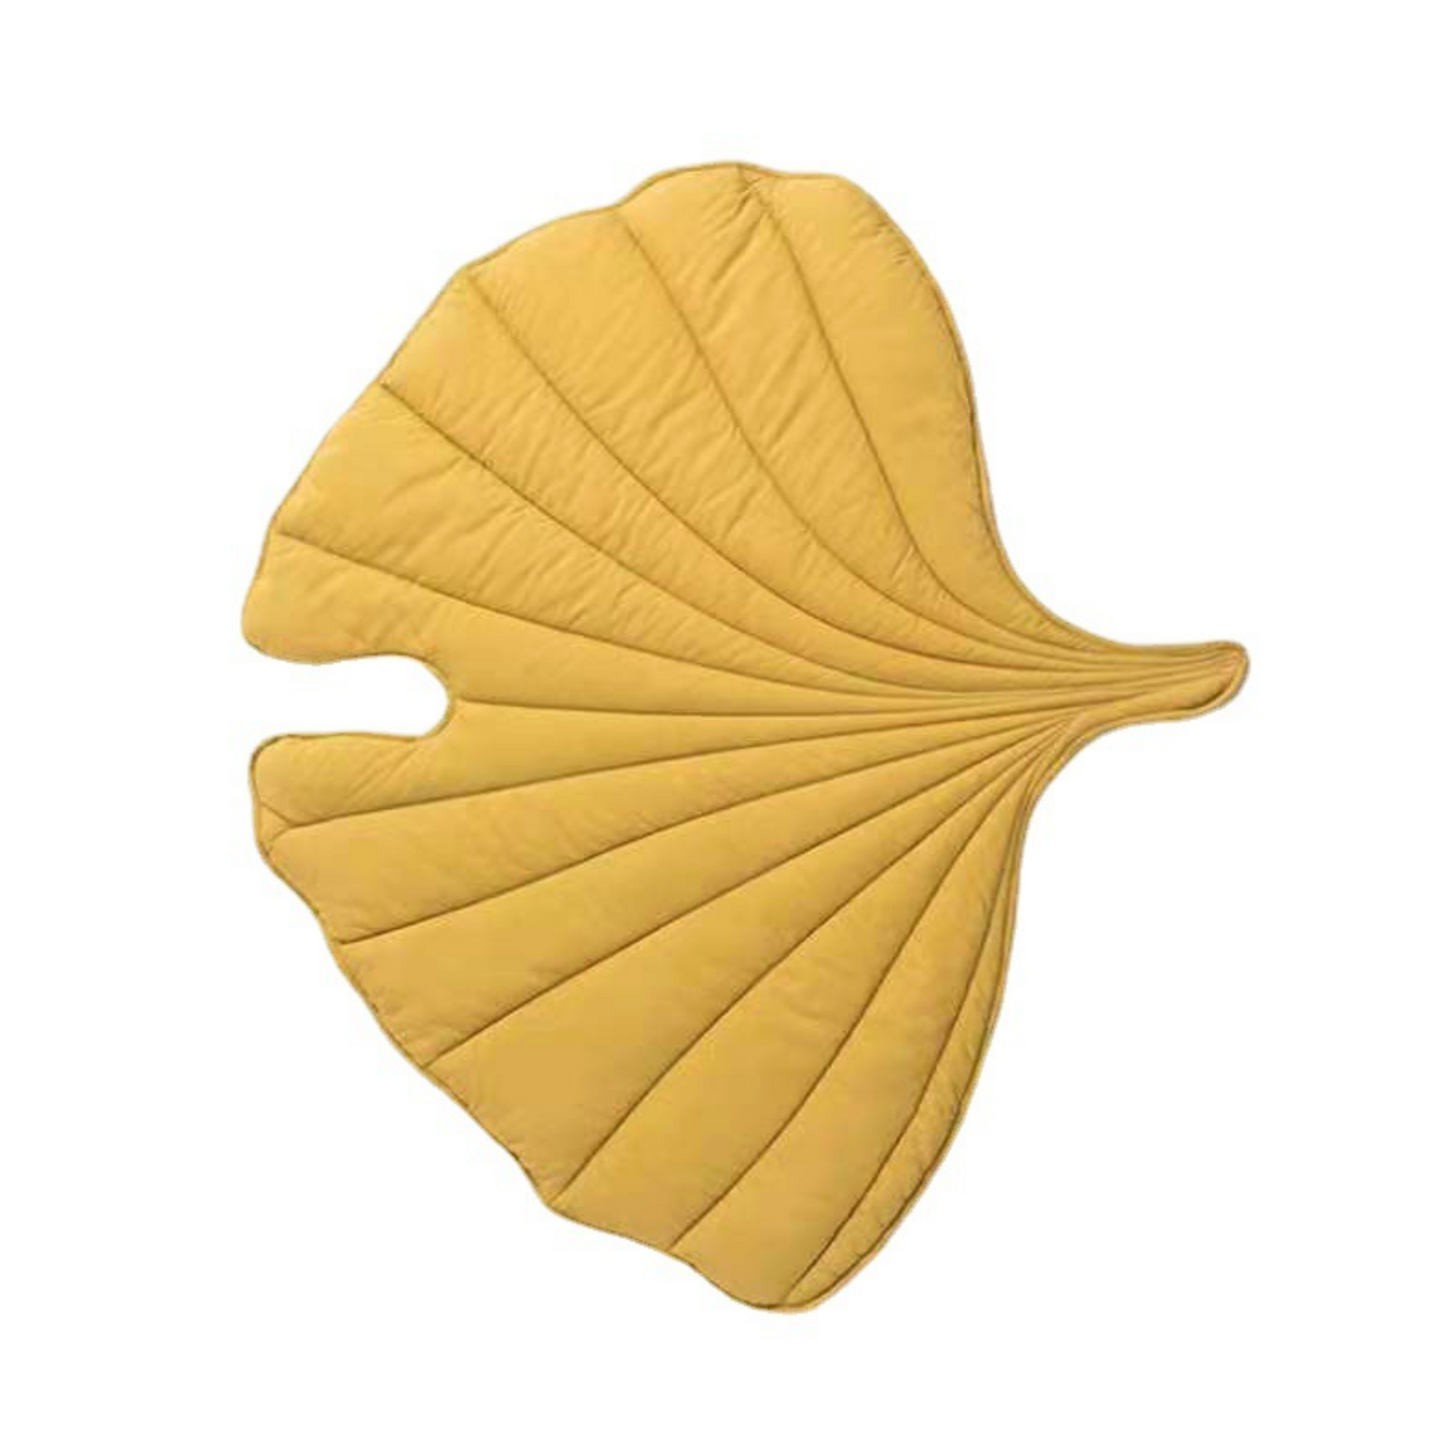 Ginkgo Leaf Quilted Playmat Tummy Time Rug - 127cm*115cm